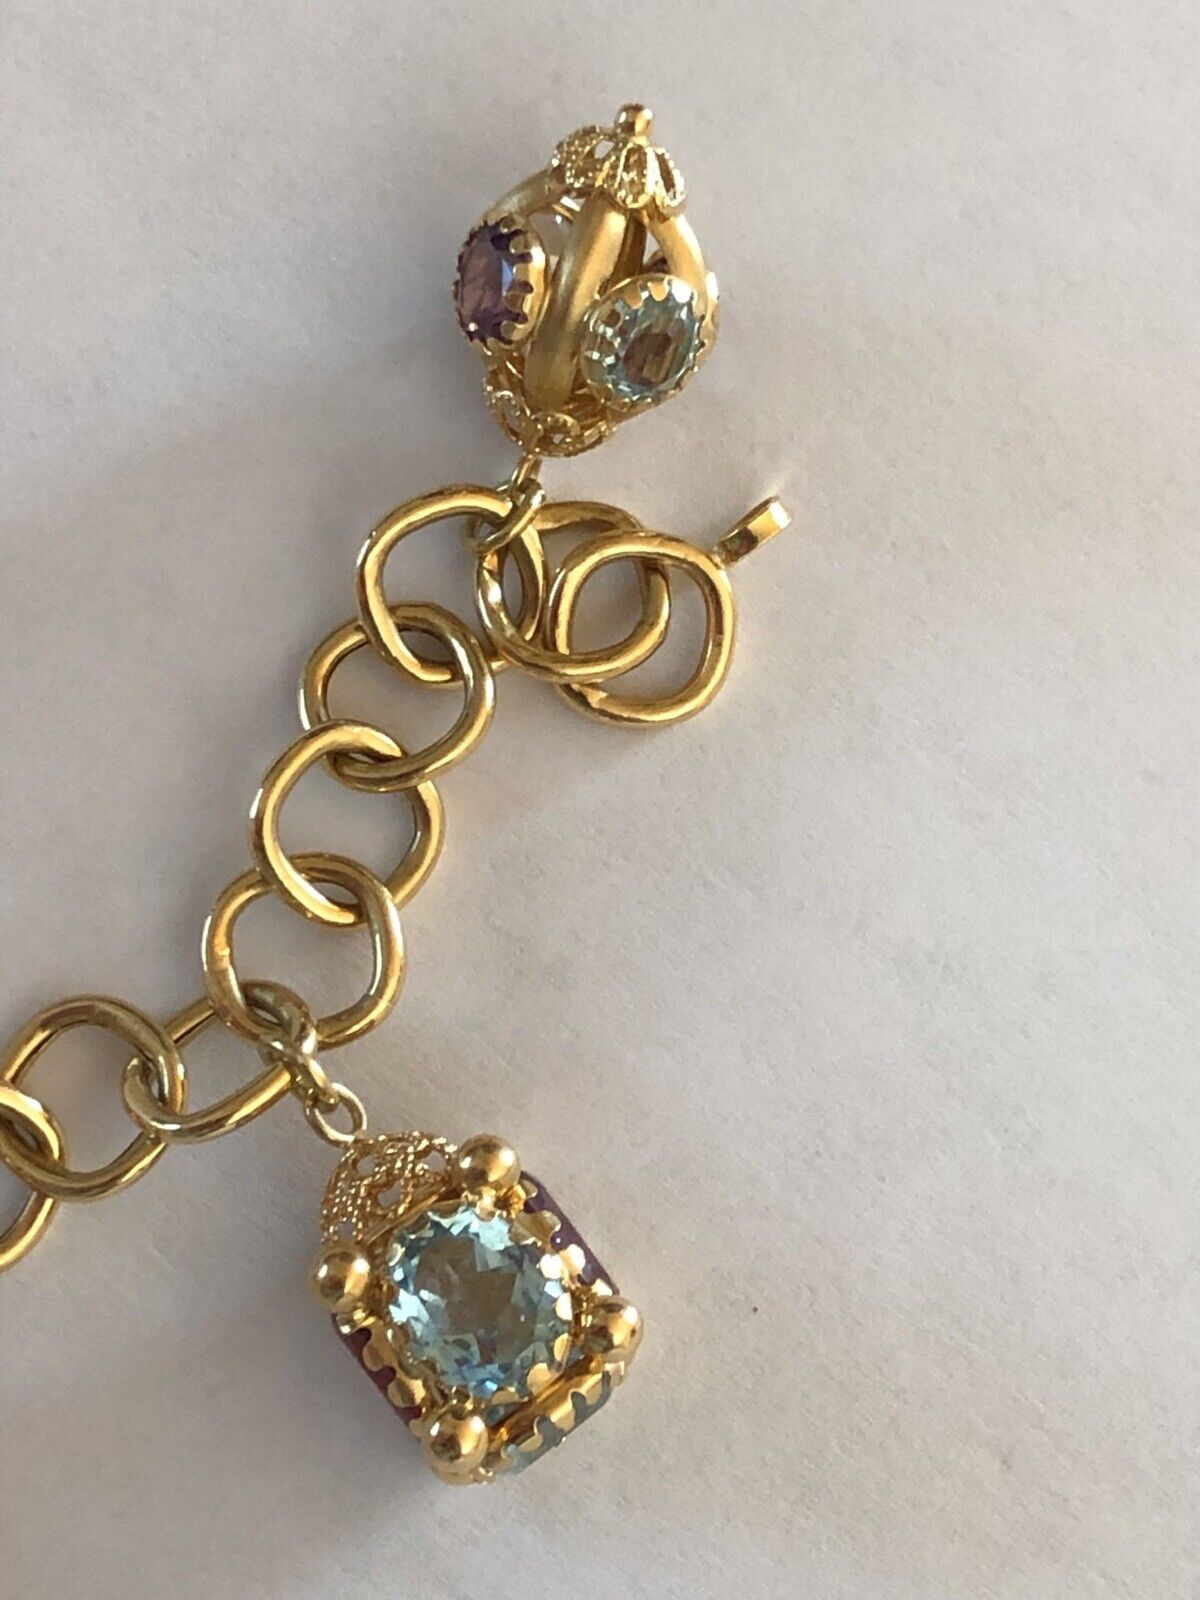 Stunning & Exquisite 18k Yellow Gold Sputnik Bracelet 7" with Gems - 21.8 g